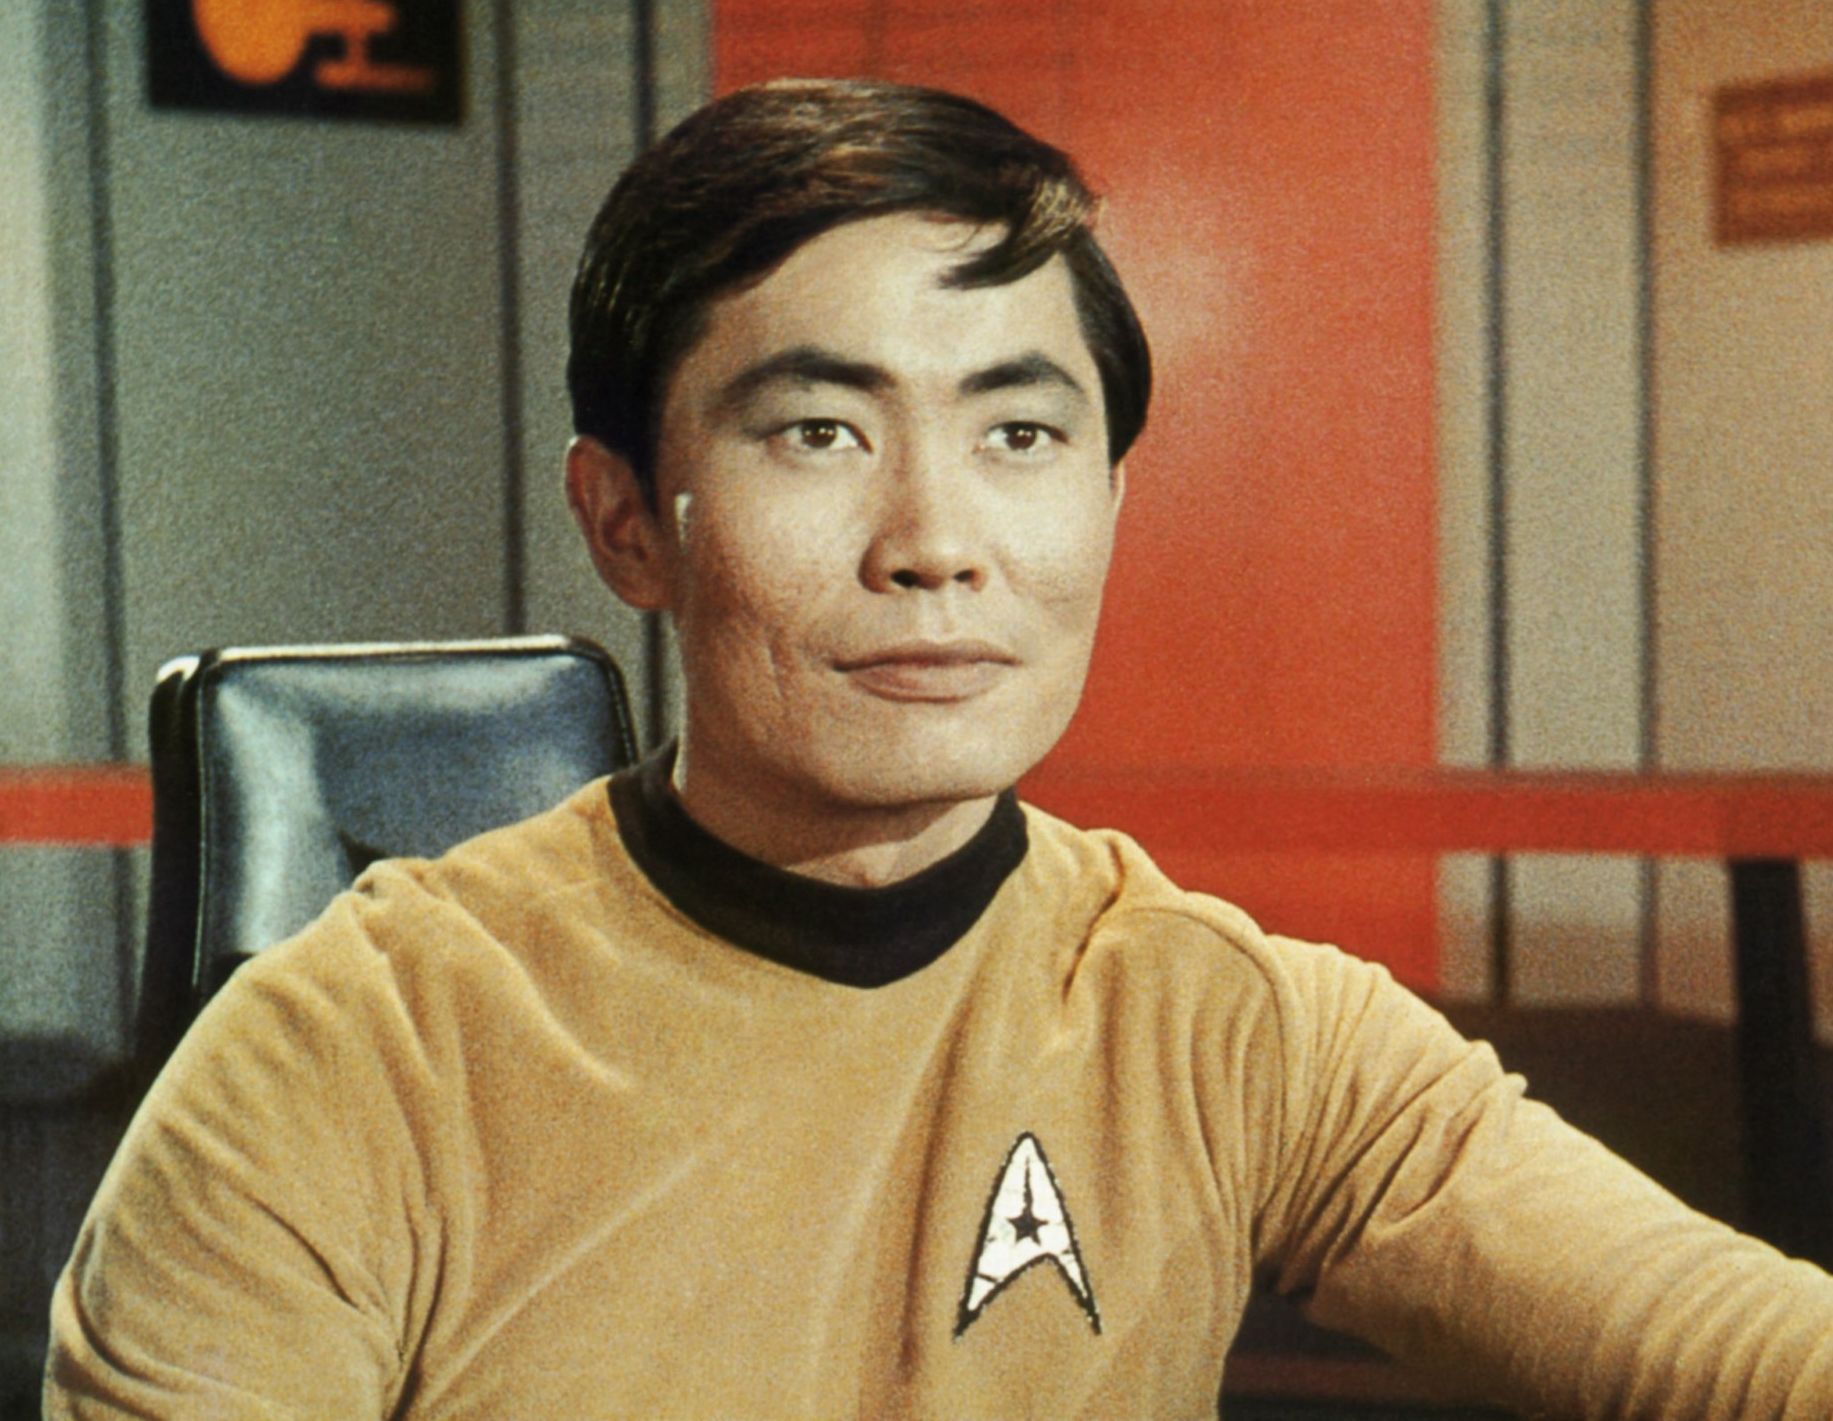 Takei as Hikaru Sulu from the classic Star Trek